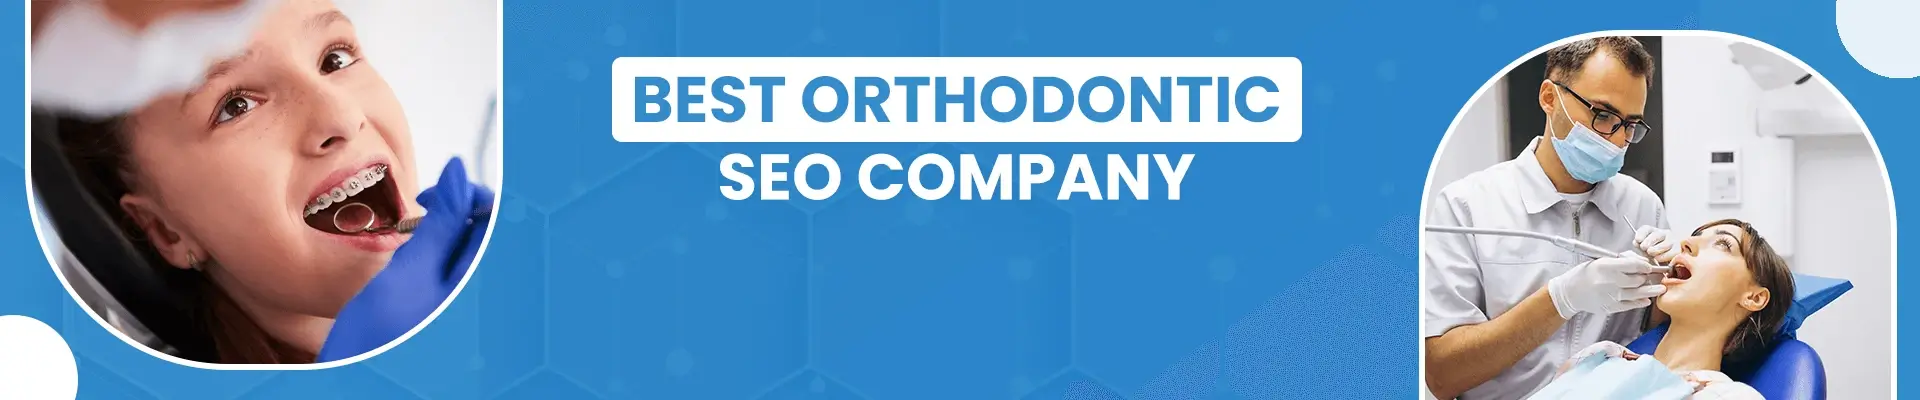 Orthodontic SEO Company